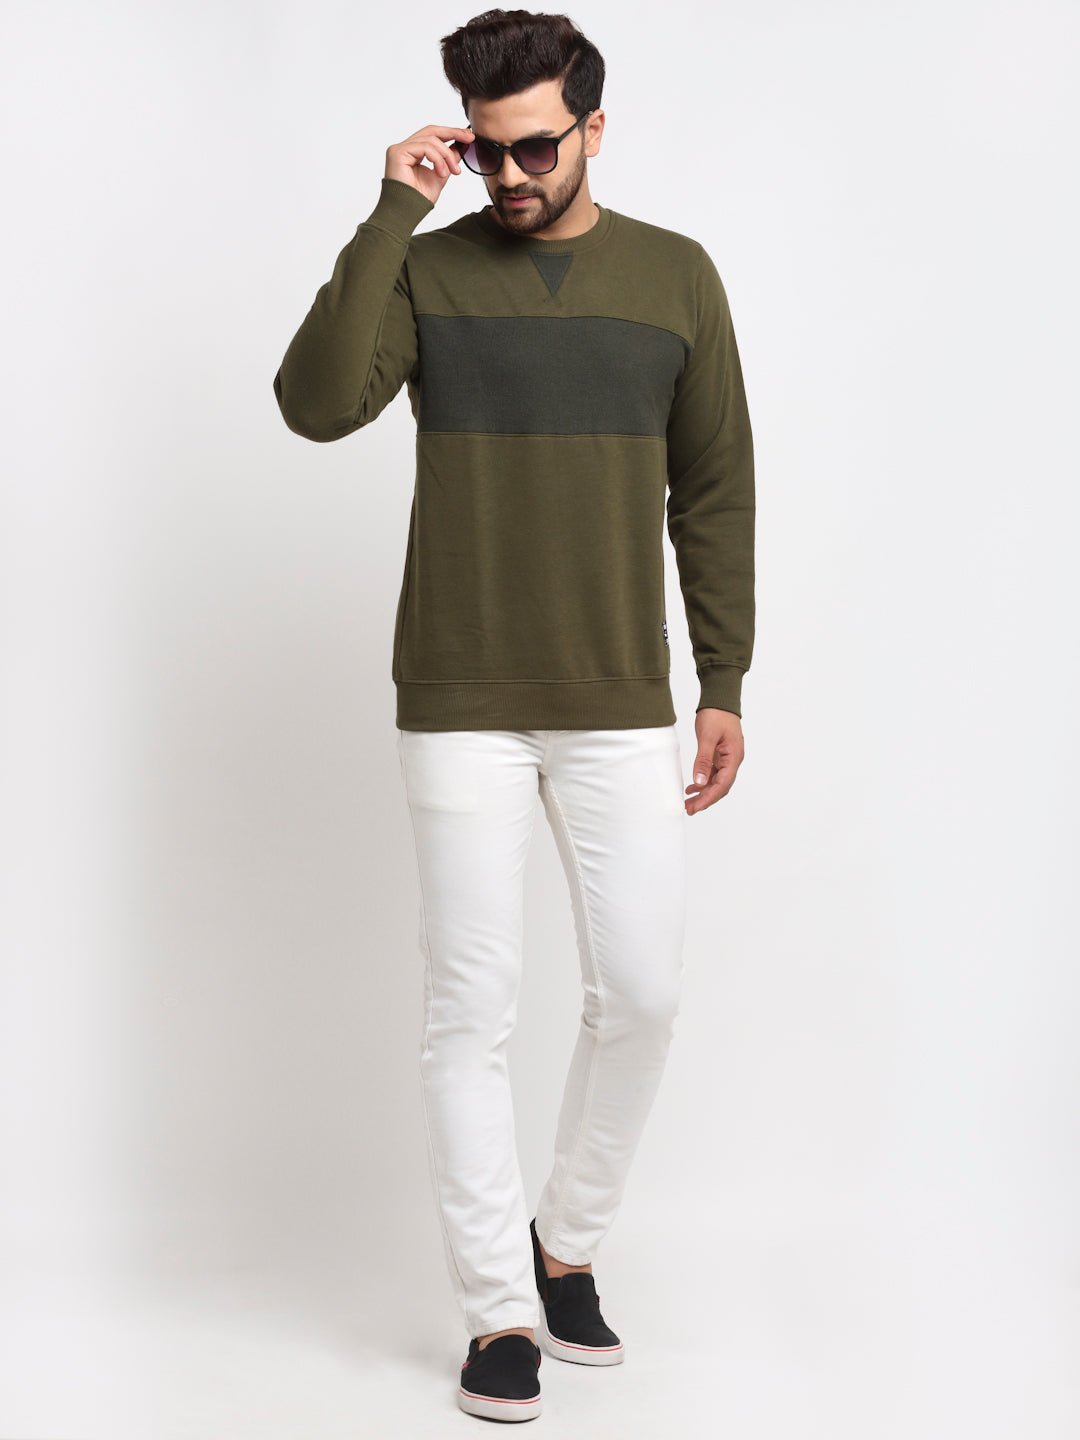 Olive Colourblocked Round Neck Sweatshirt - clubyork